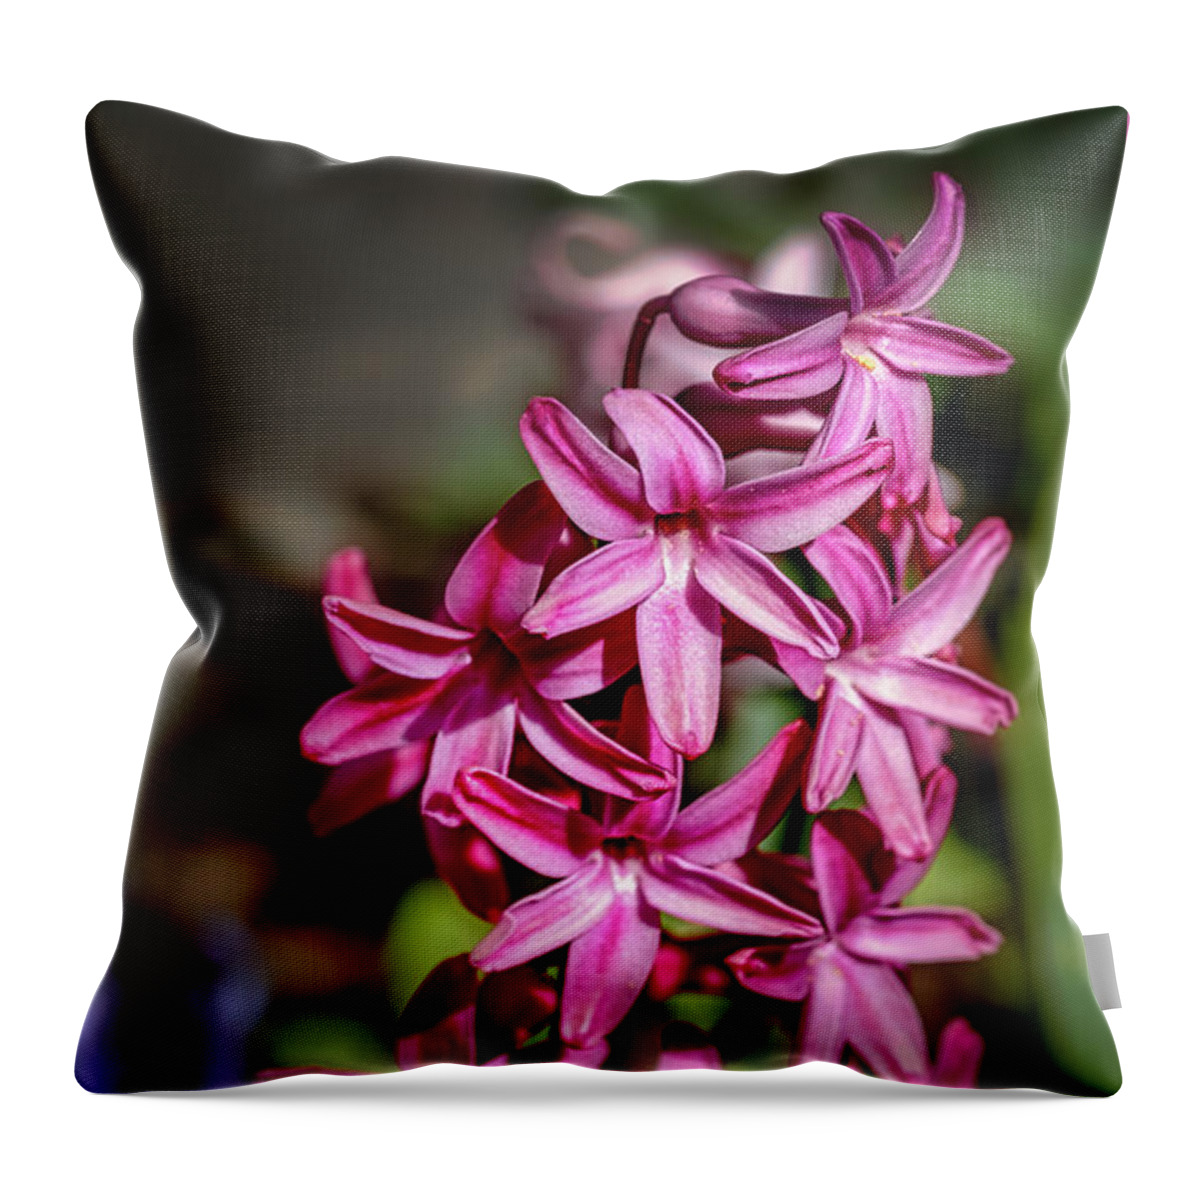 Fuchsia Throw Pillow featuring the photograph Fuchsia hyacinth by The P